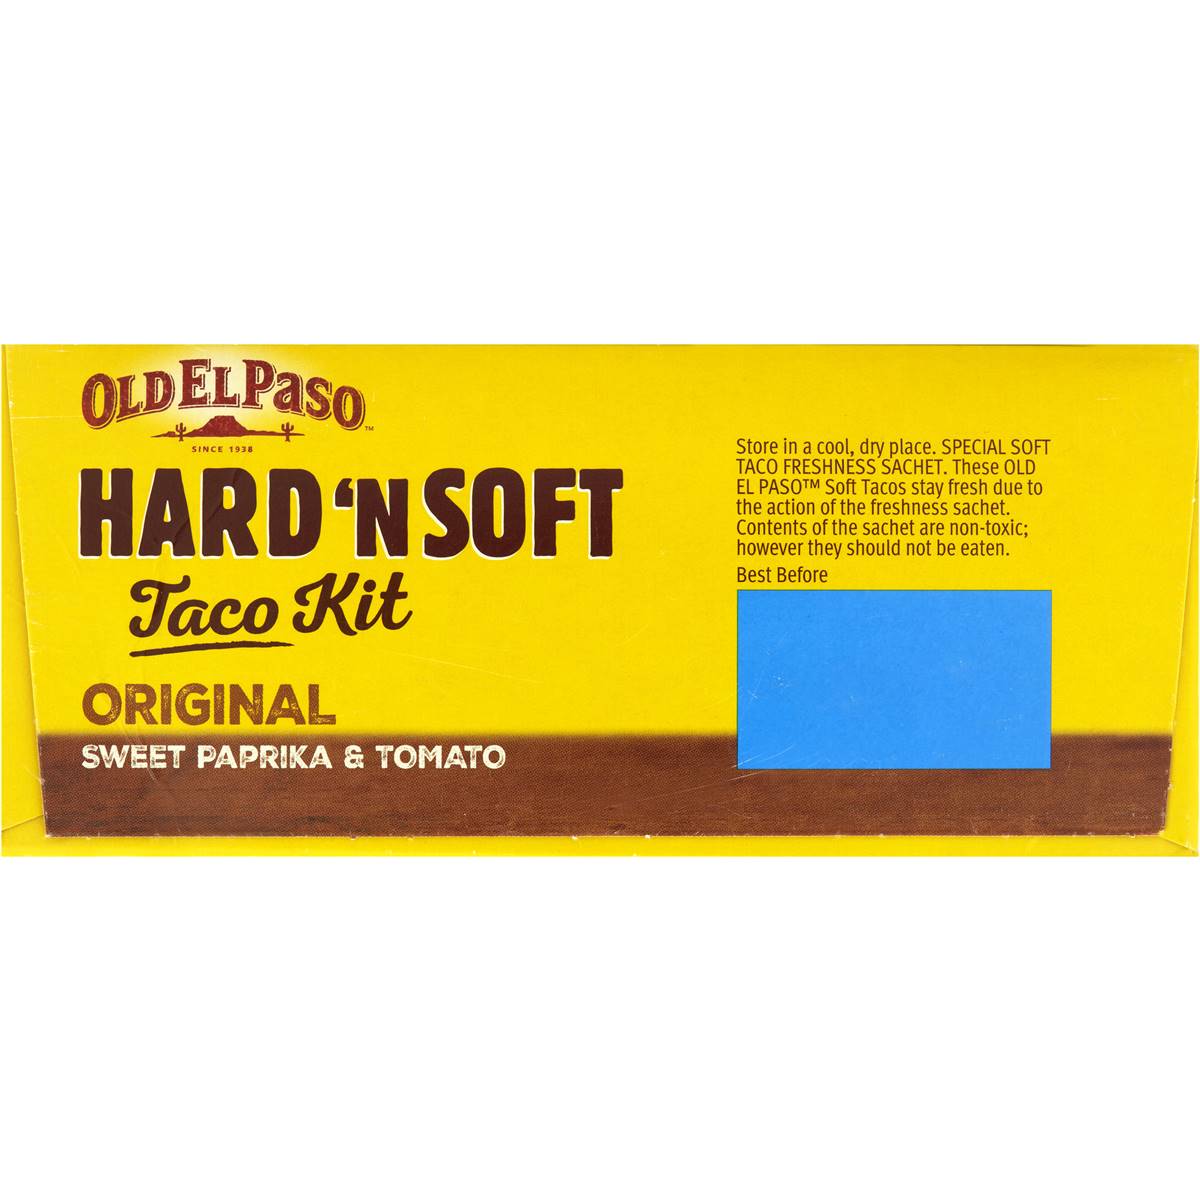 old el paso hard taco kit instructions